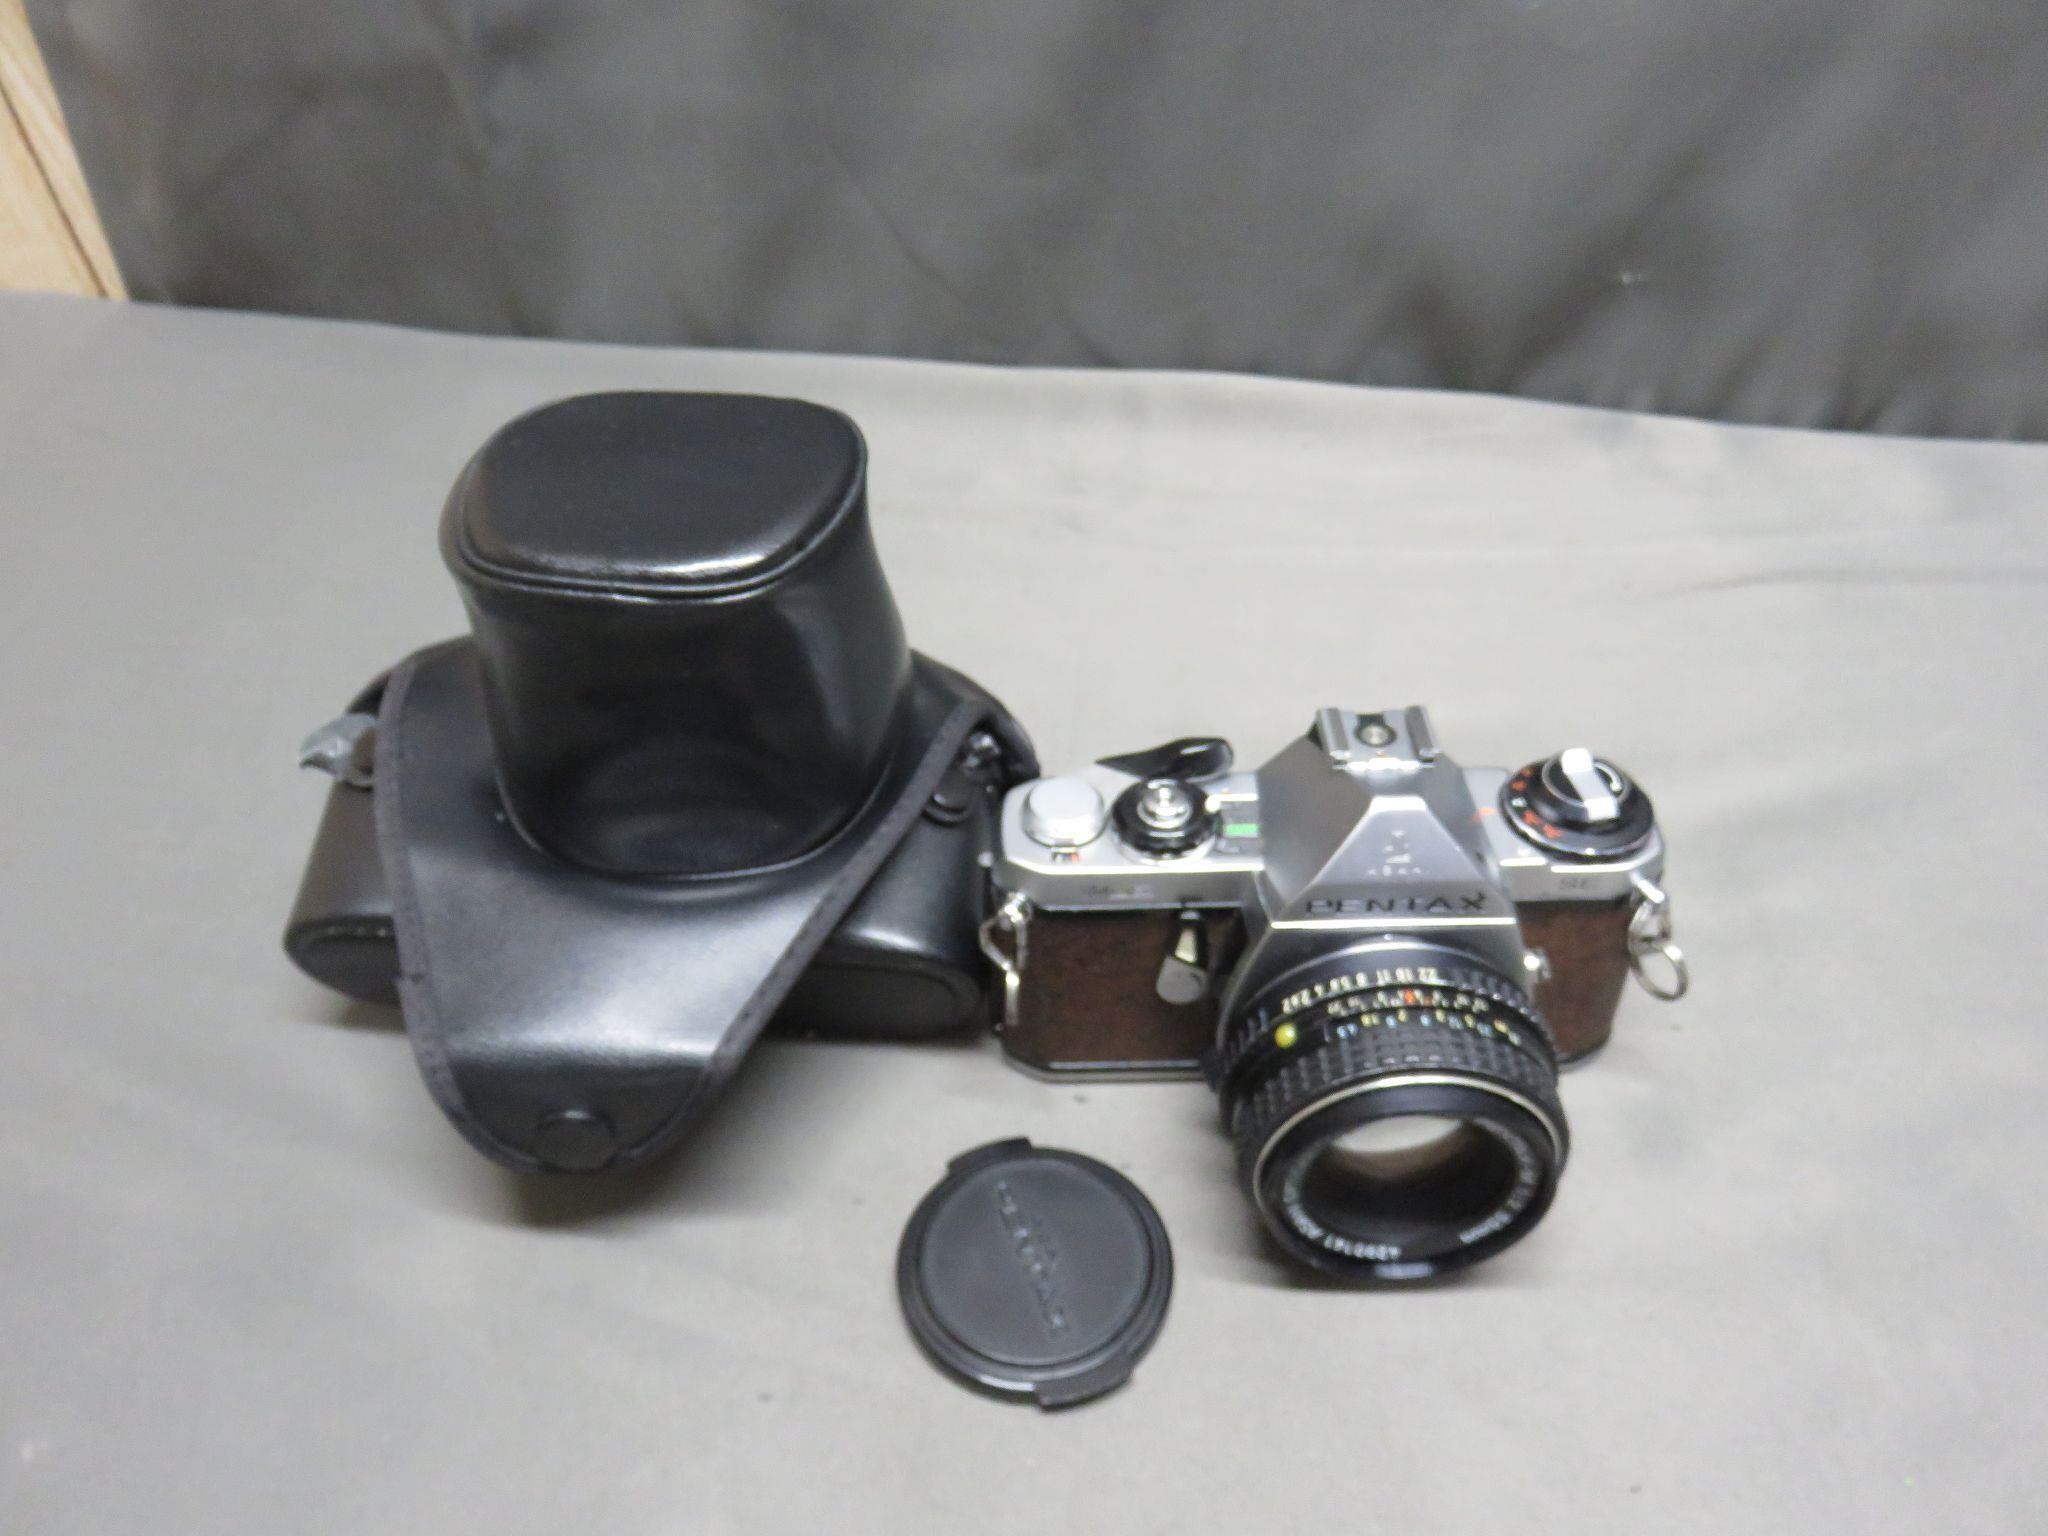 Pentax ME SE Camera Lens and Case